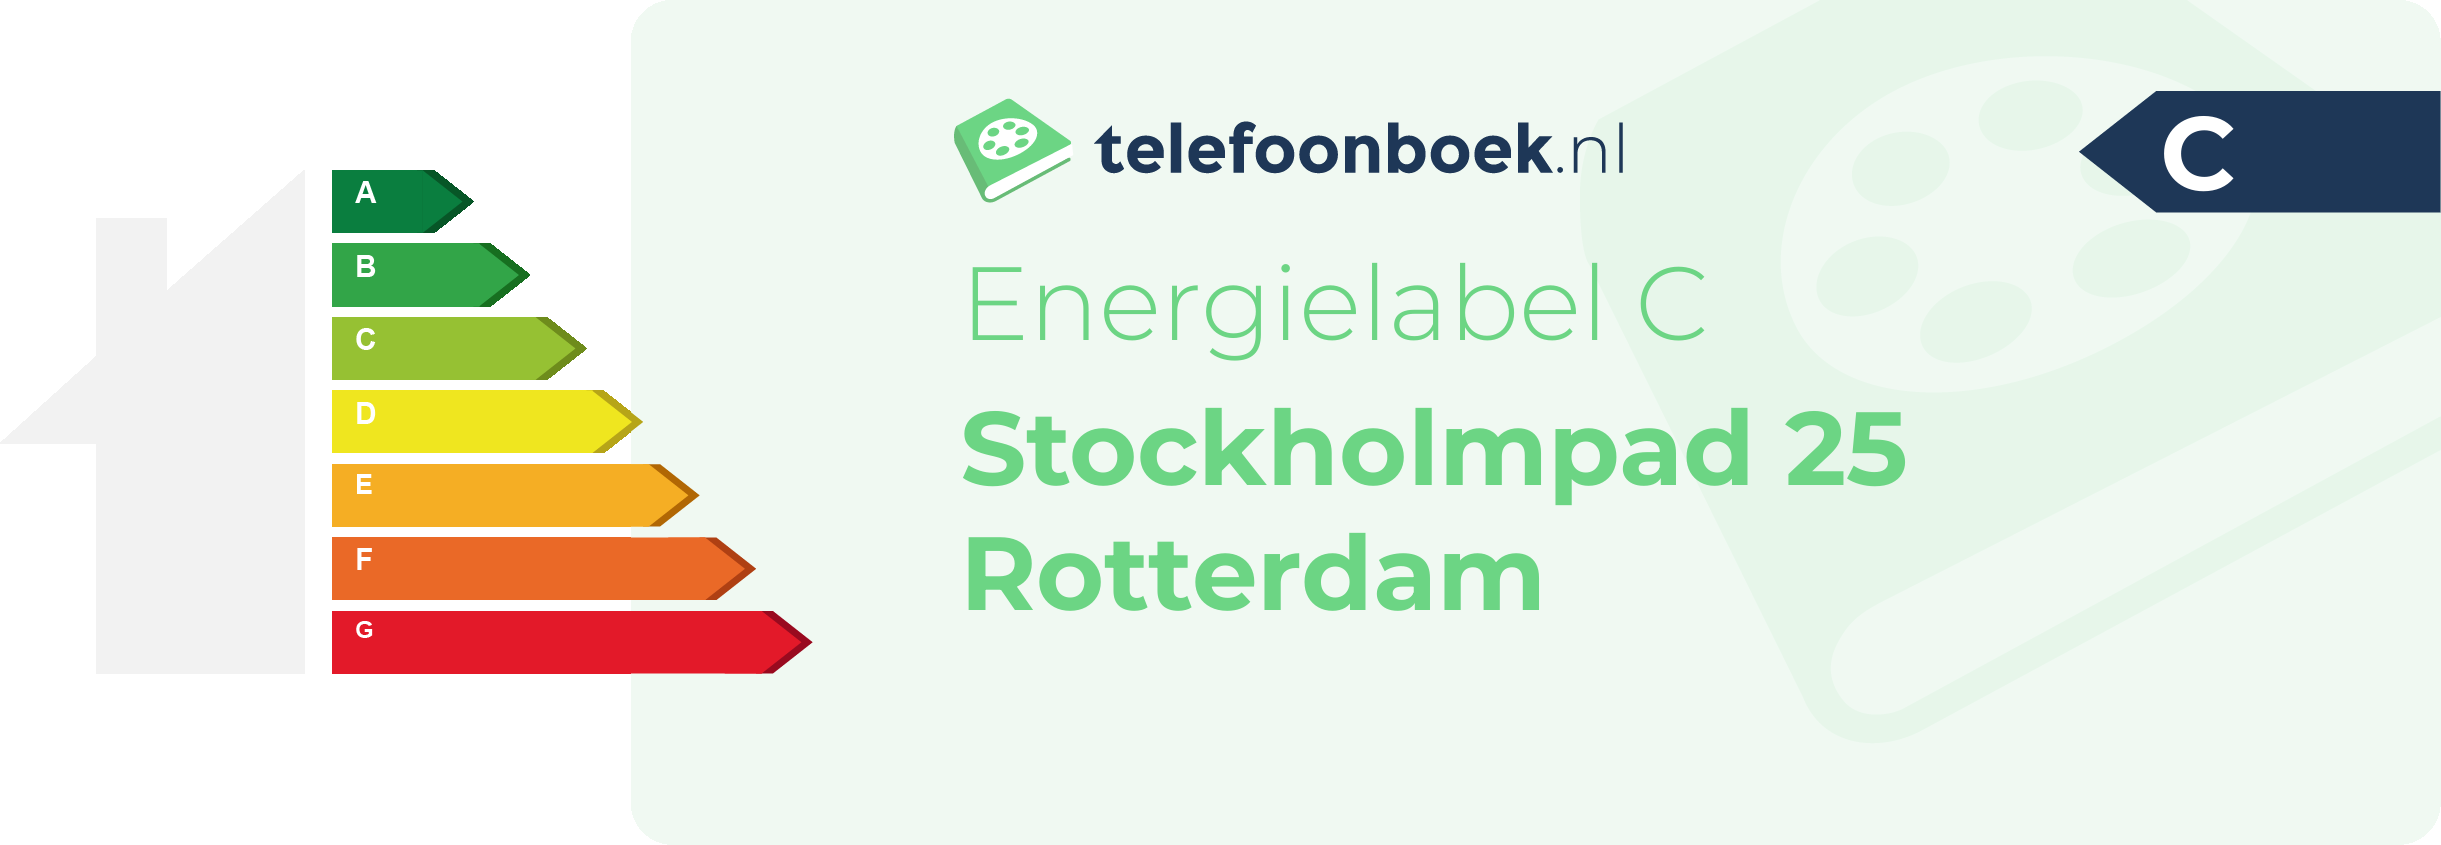 Energielabel Stockholmpad 25 Rotterdam